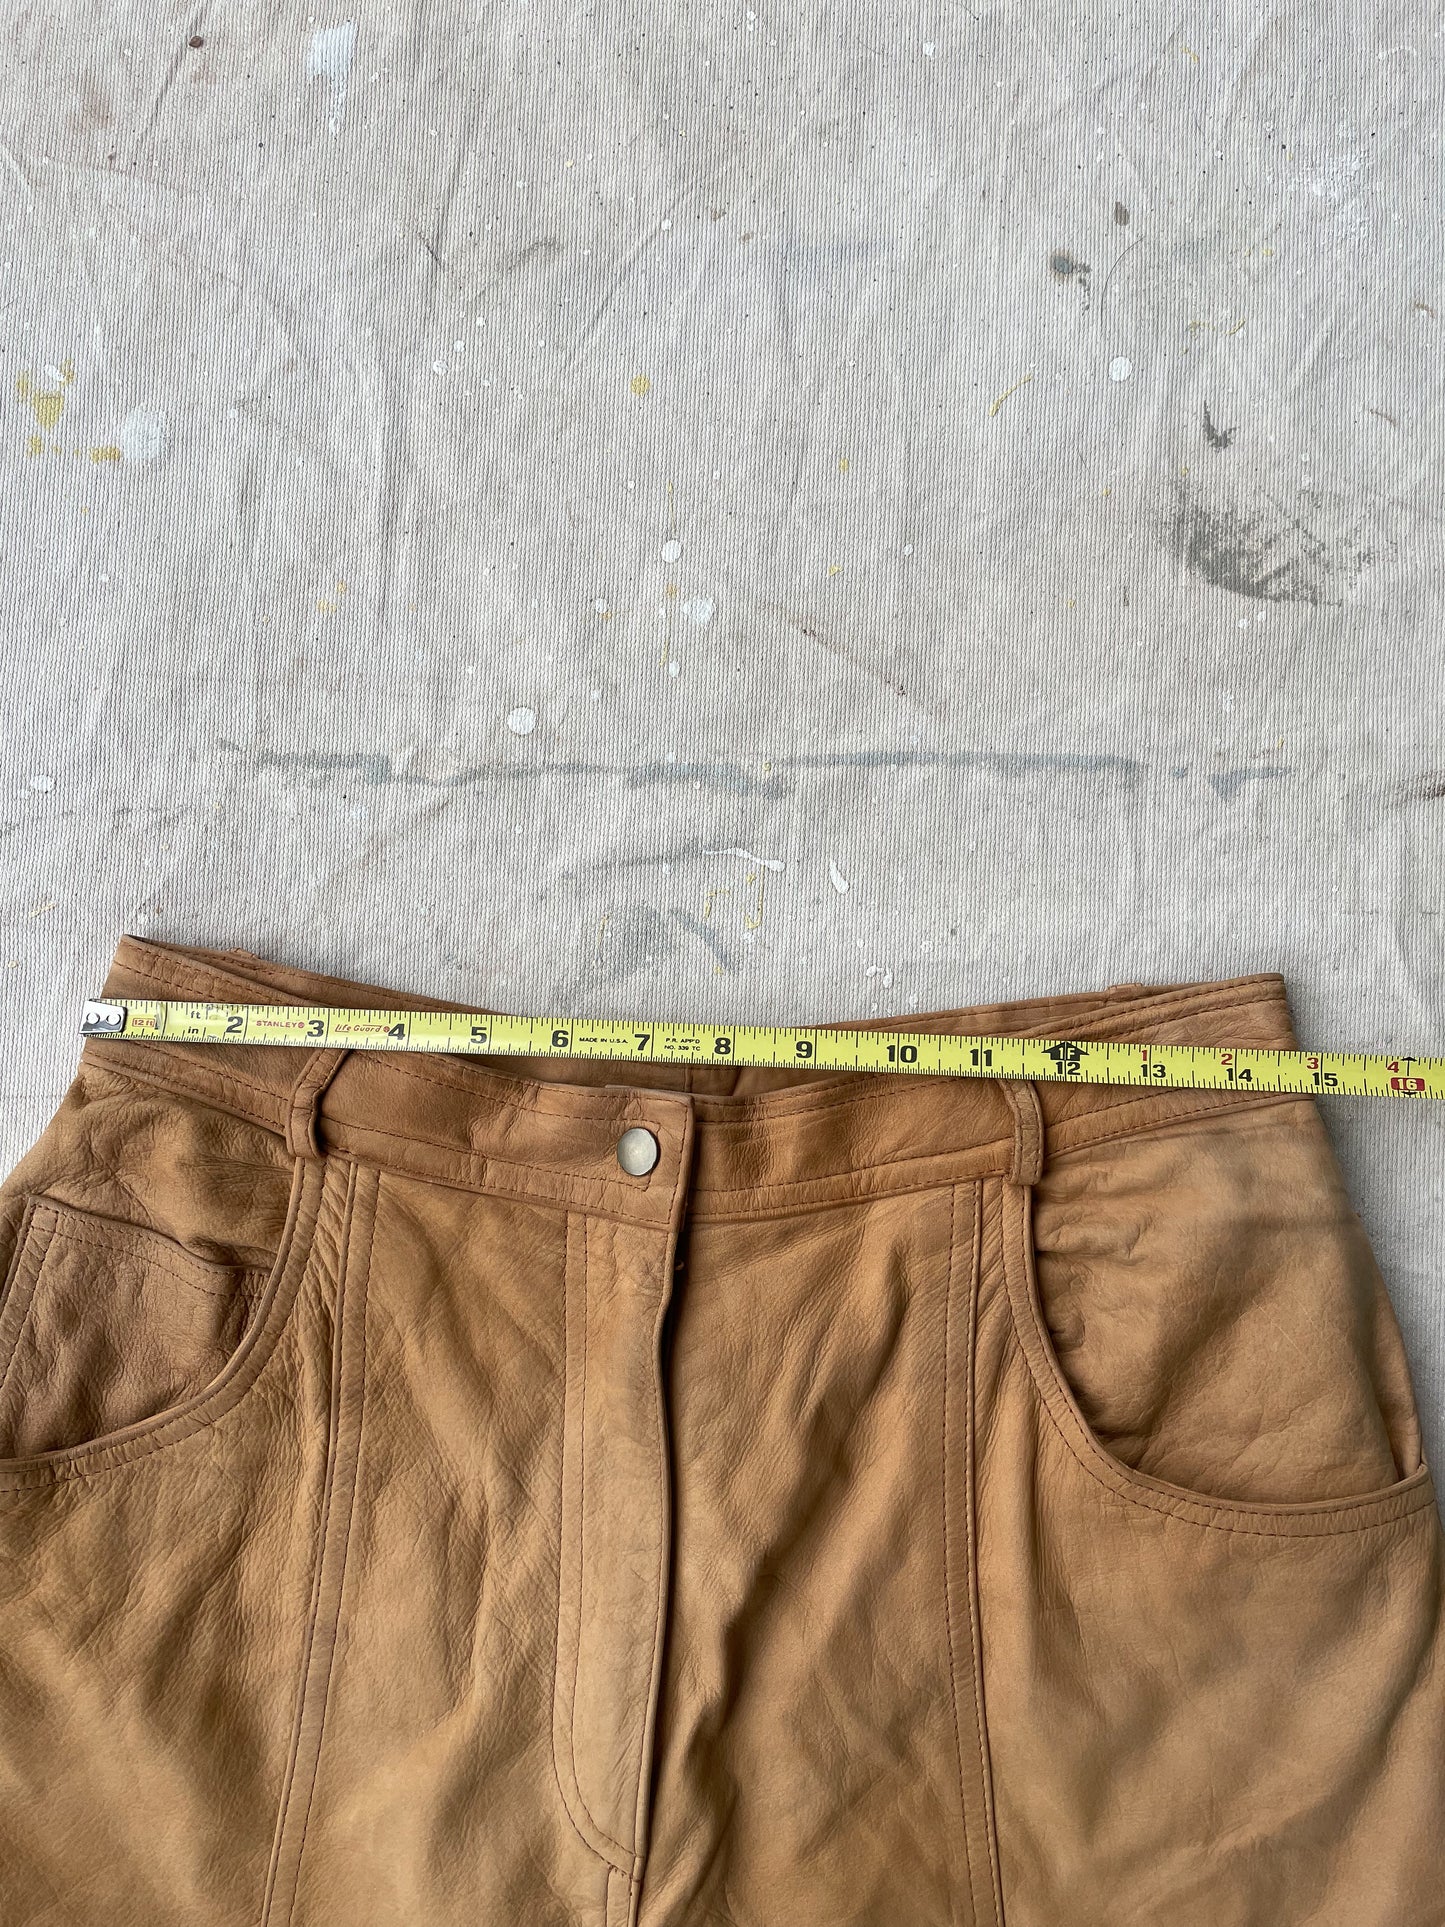 Leather Pants—[28x28]